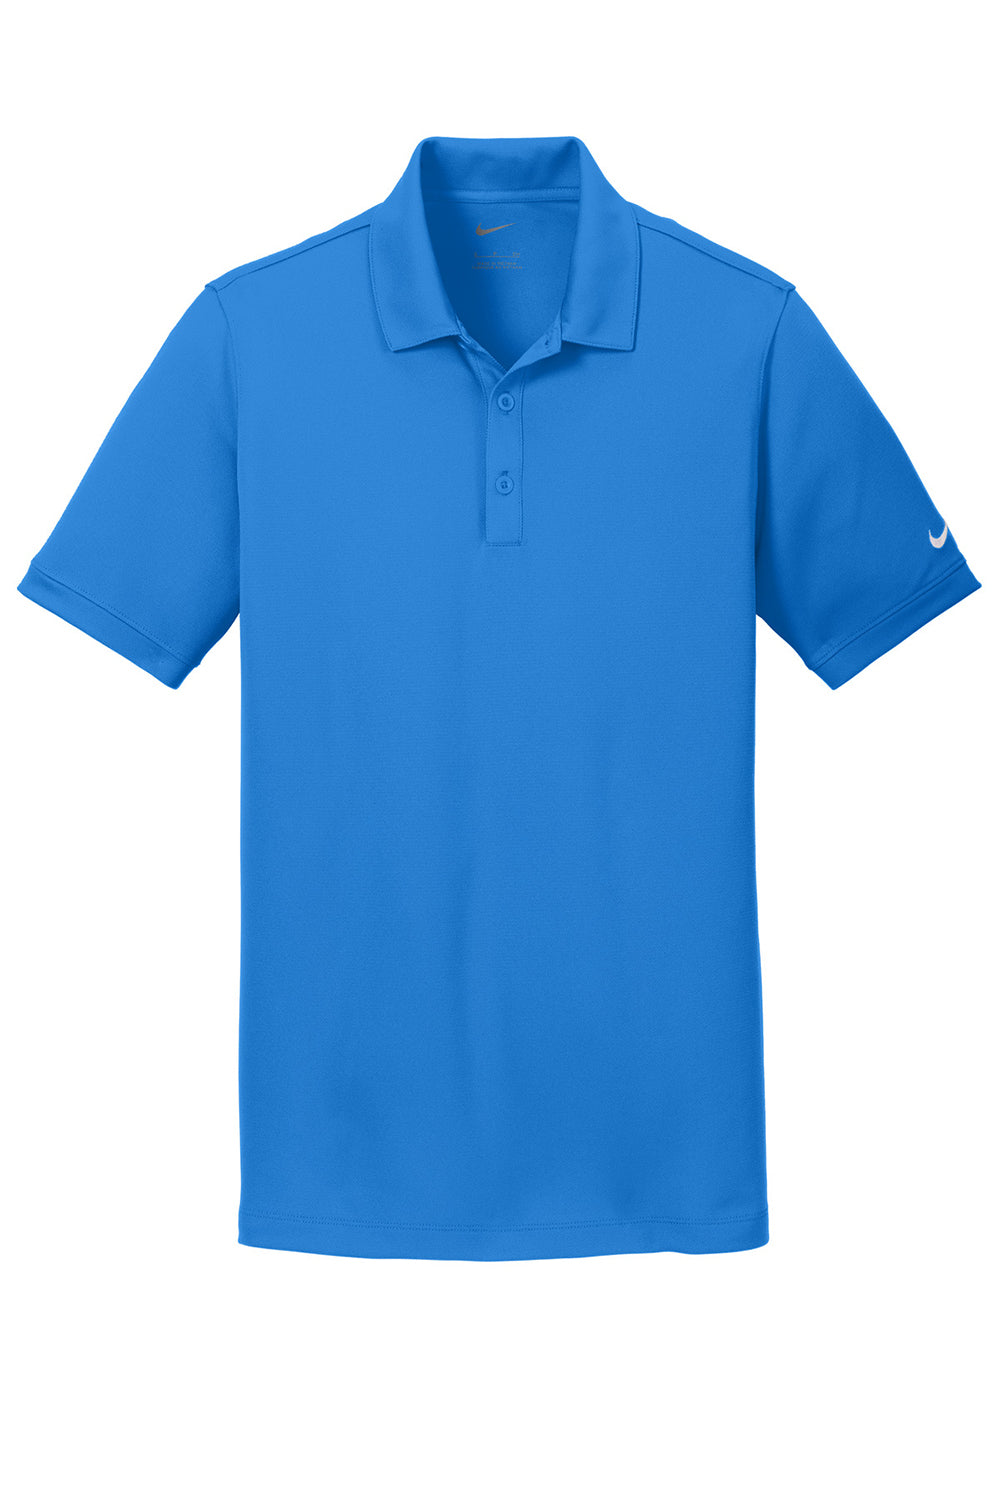 Nike 746099 Mens Icon Dri-Fit Moisture Wicking Short Sleeve Polo Shirt Light Photo Blue Flat Front